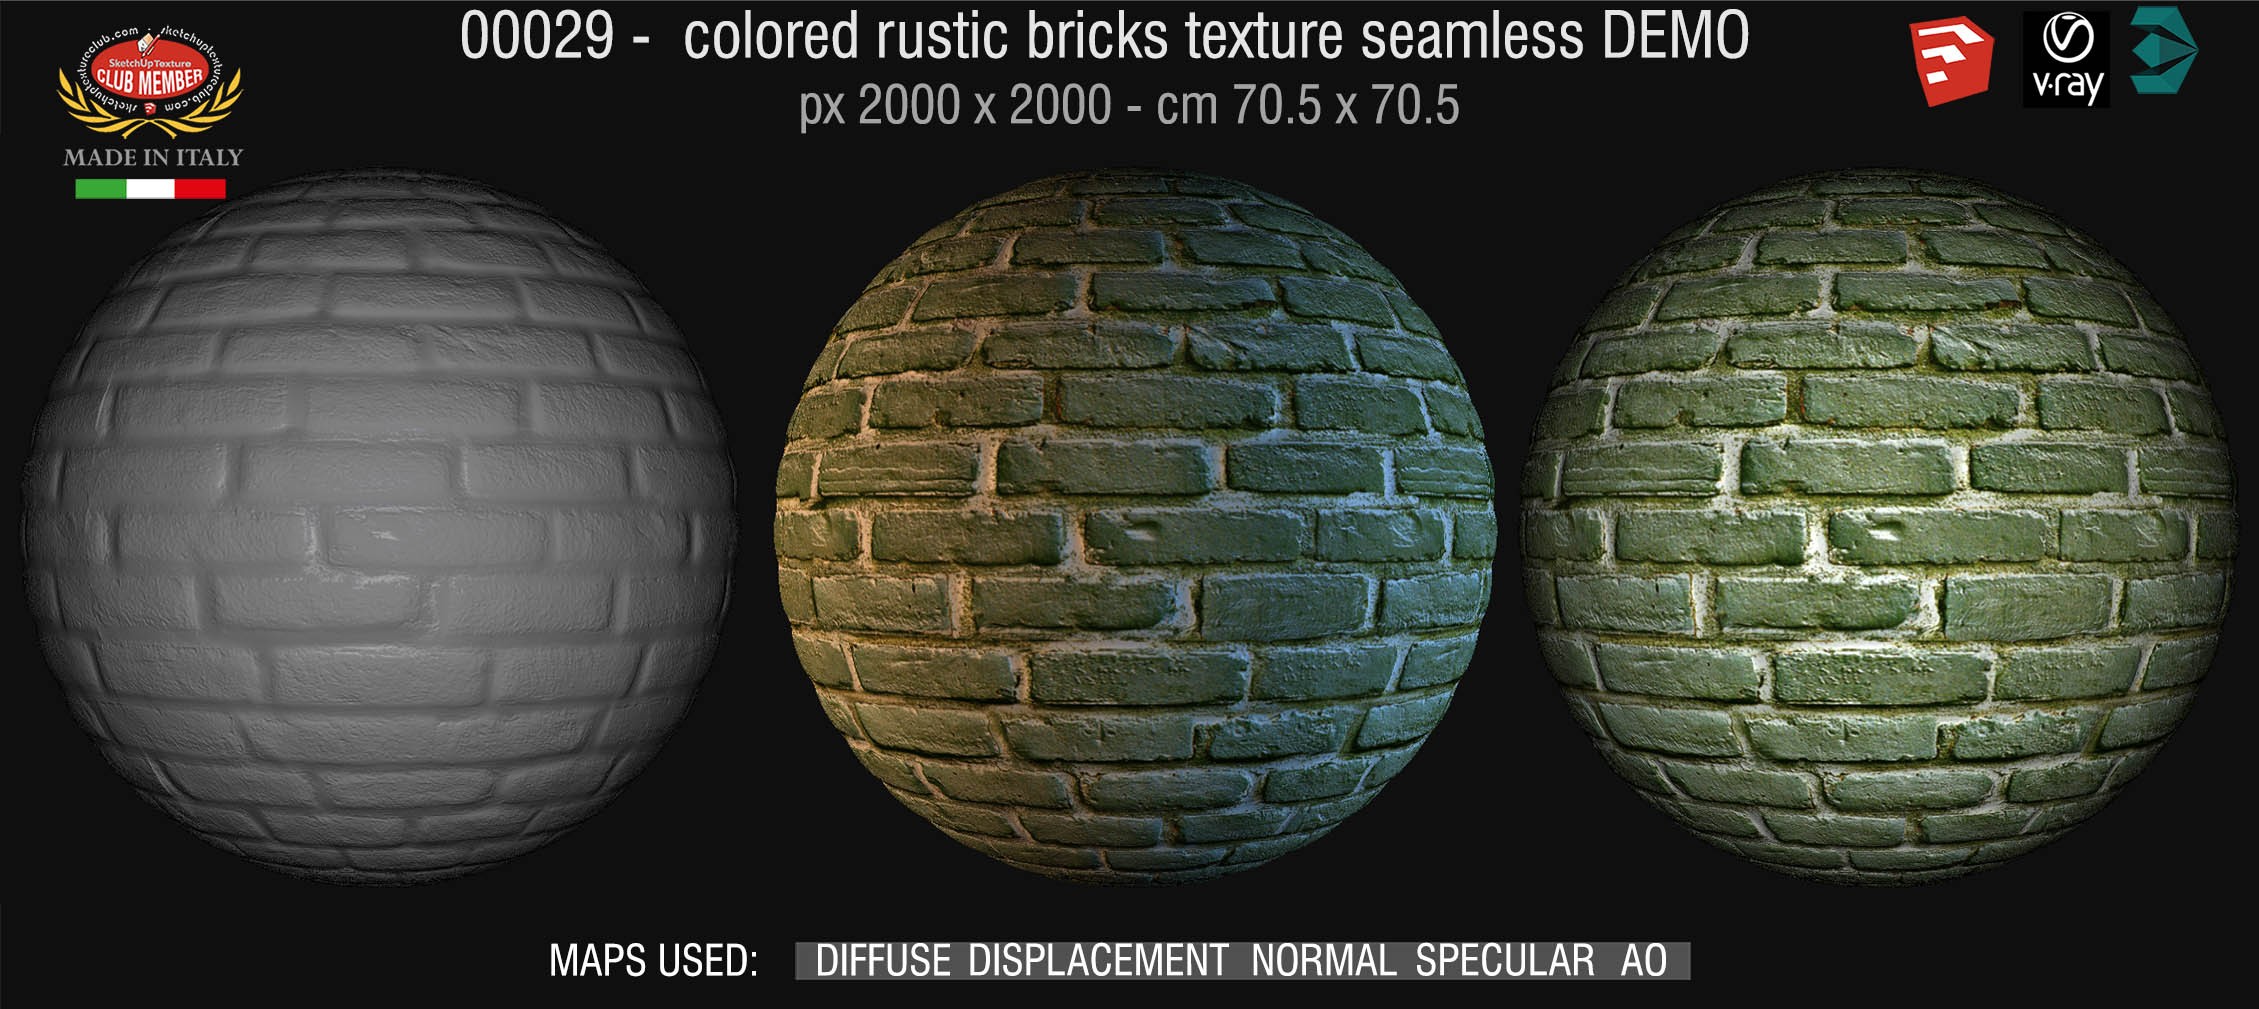 00029 colored rustic bricks texture seamless + maps DEMO